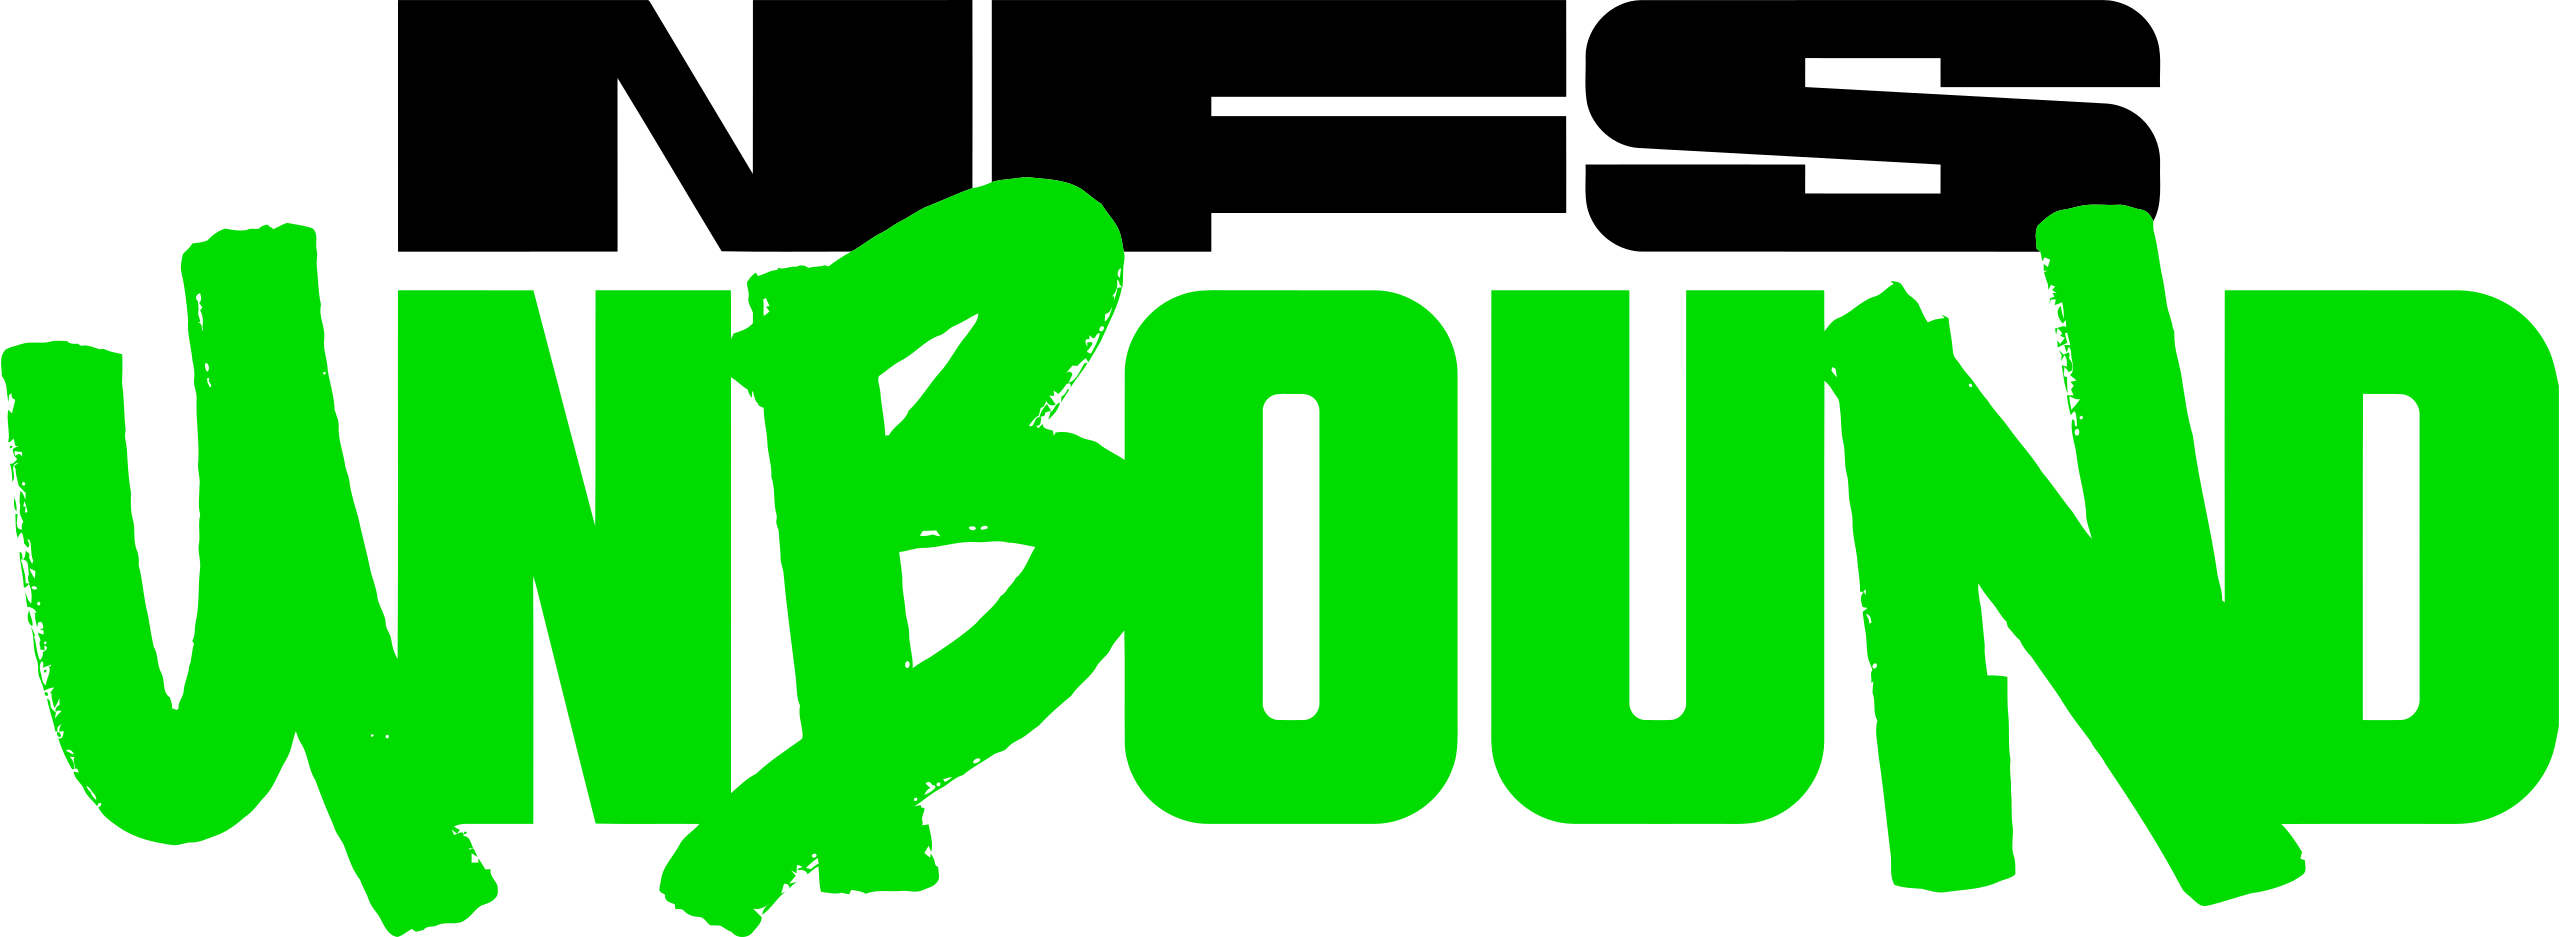 1d logo font